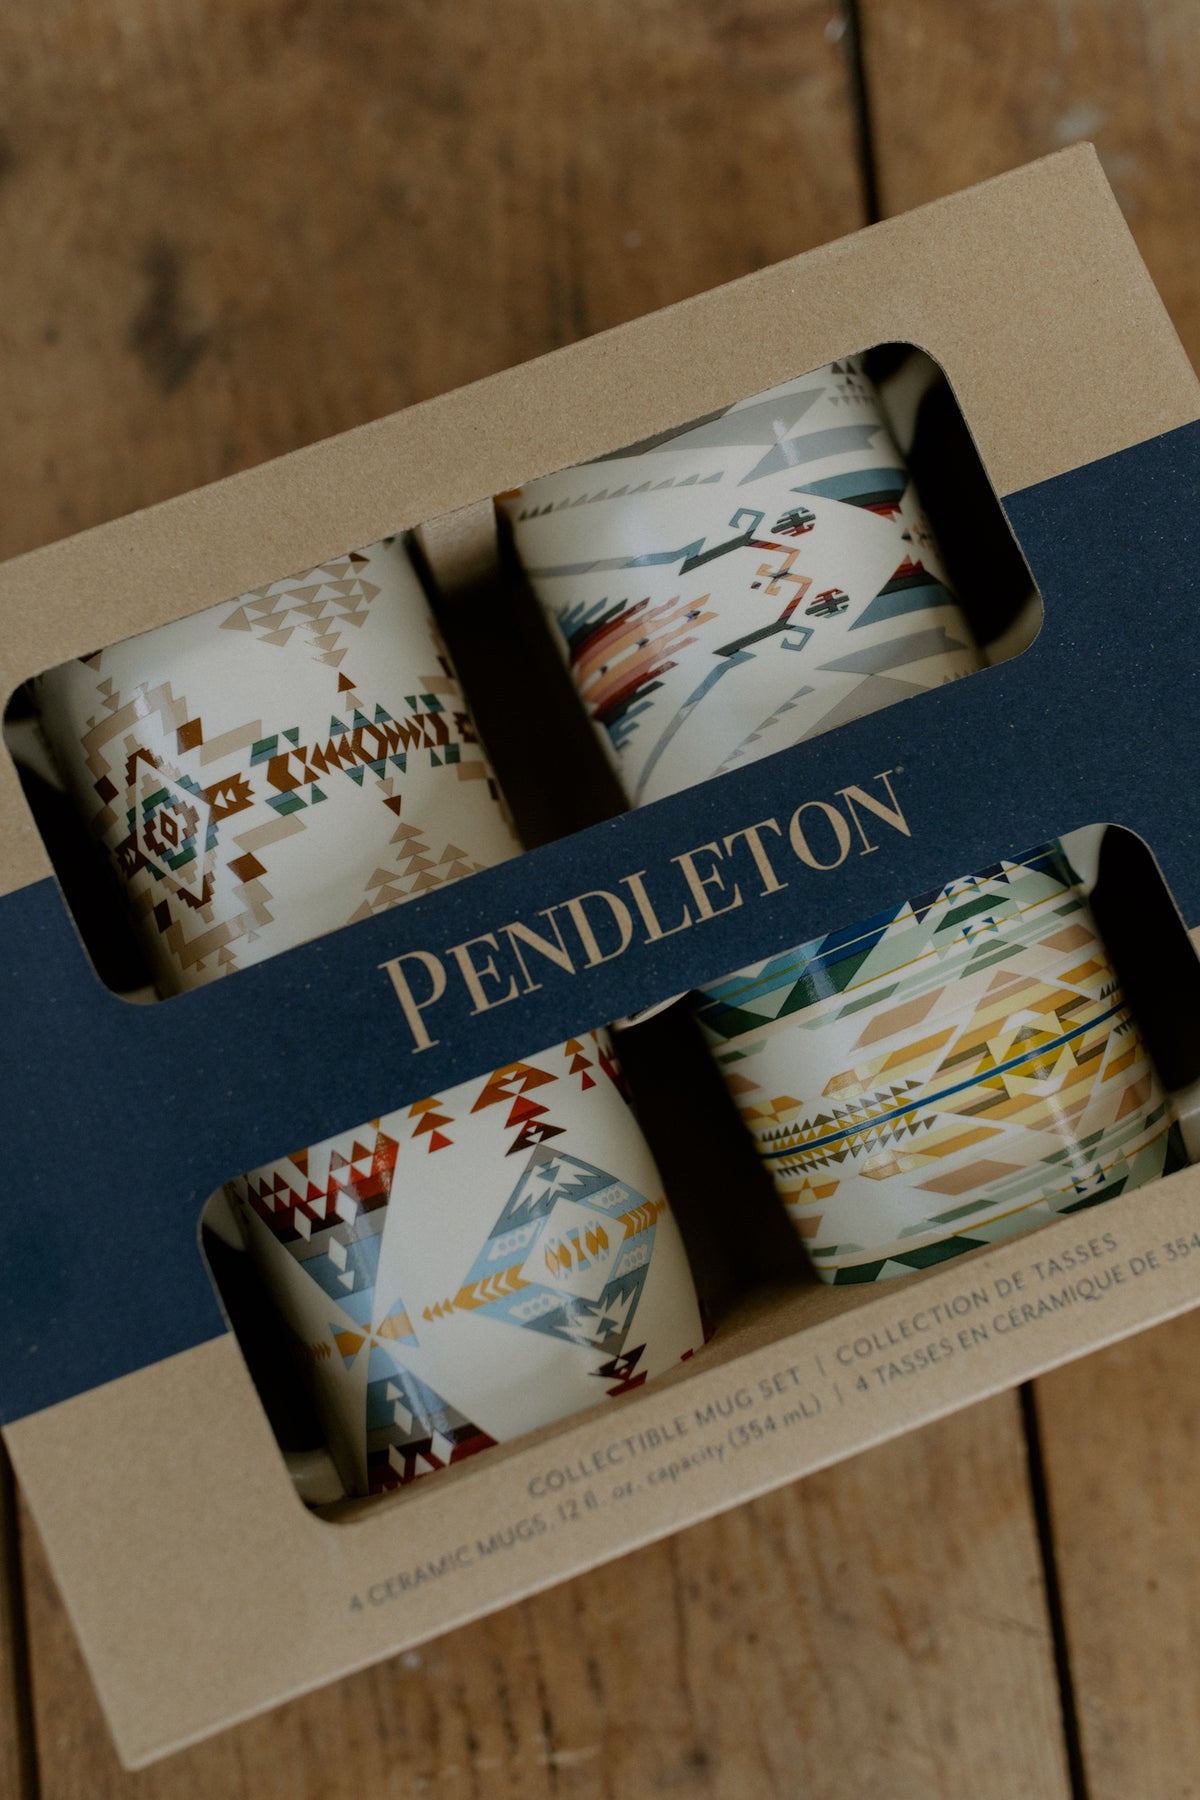 Pendleton High Desert Mugs